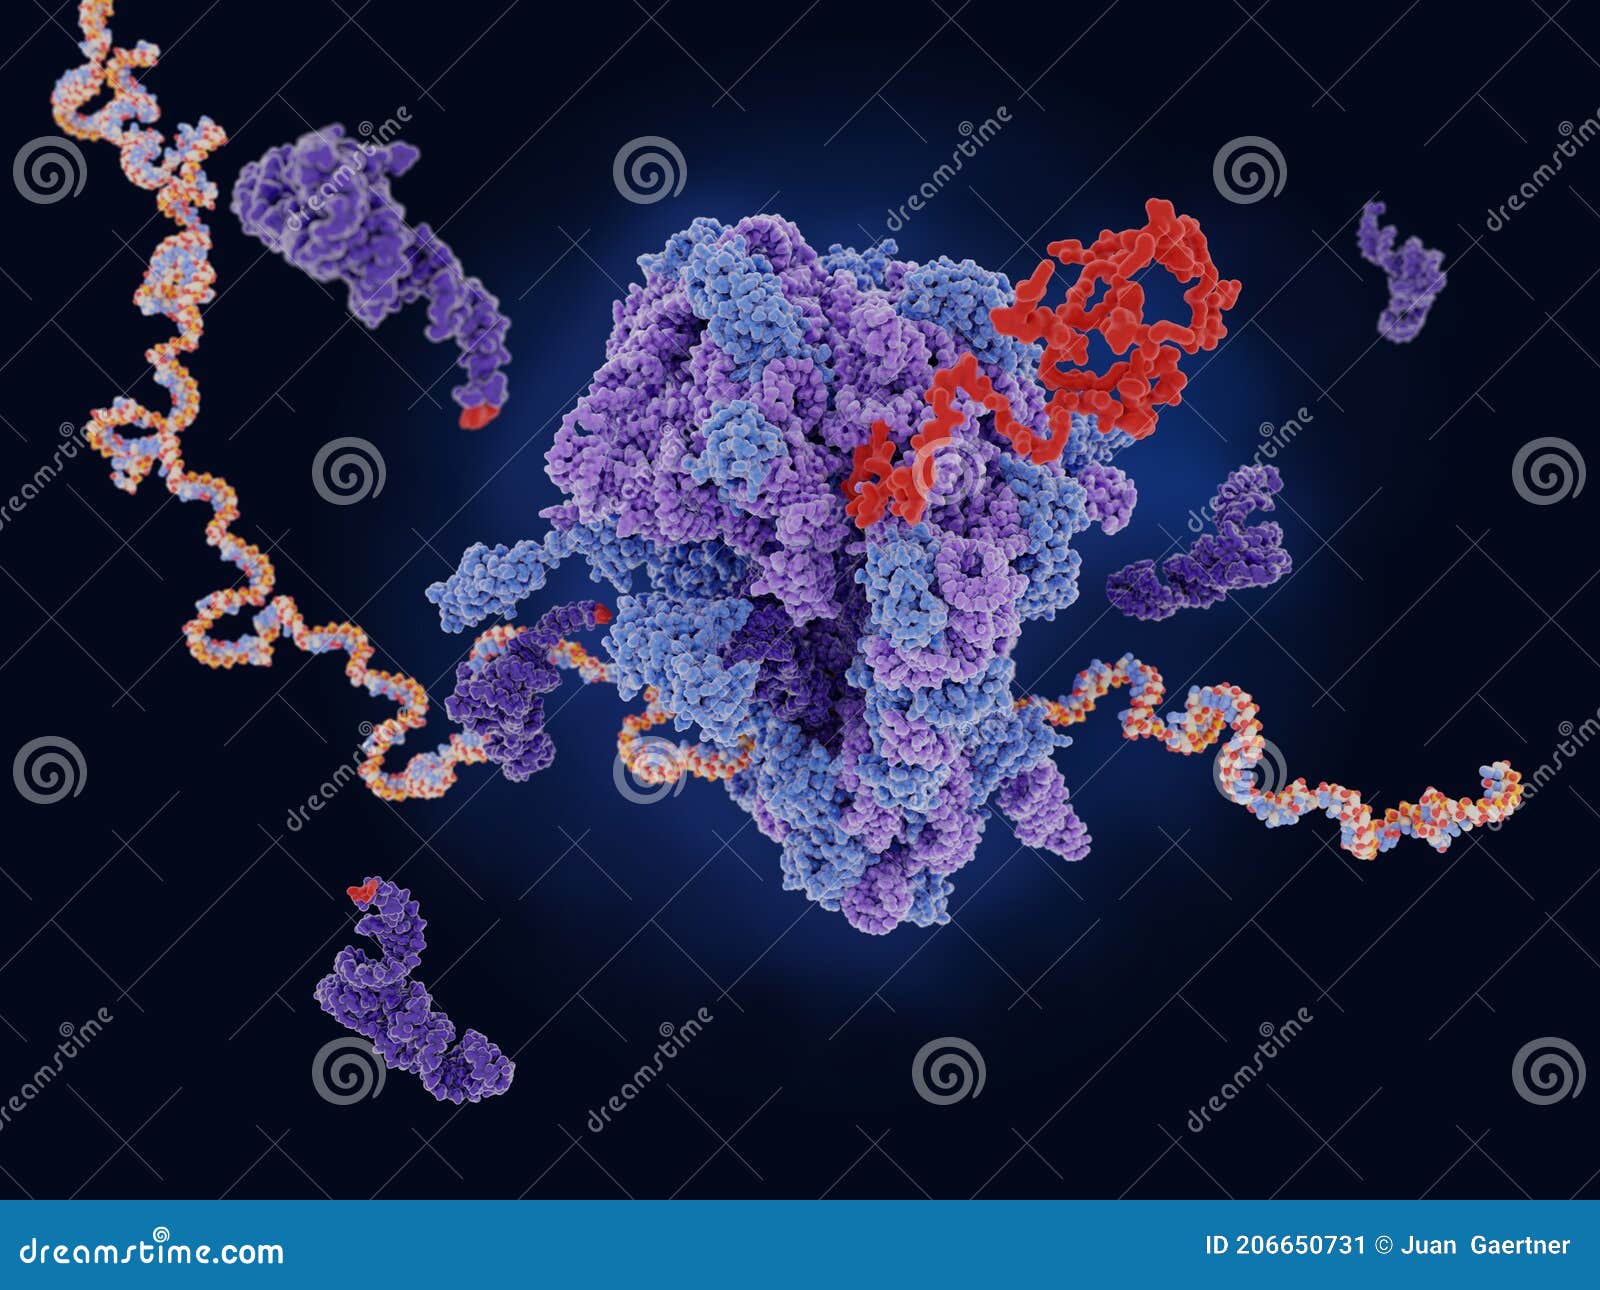 ribosome translating mrna into a polypeptide chain